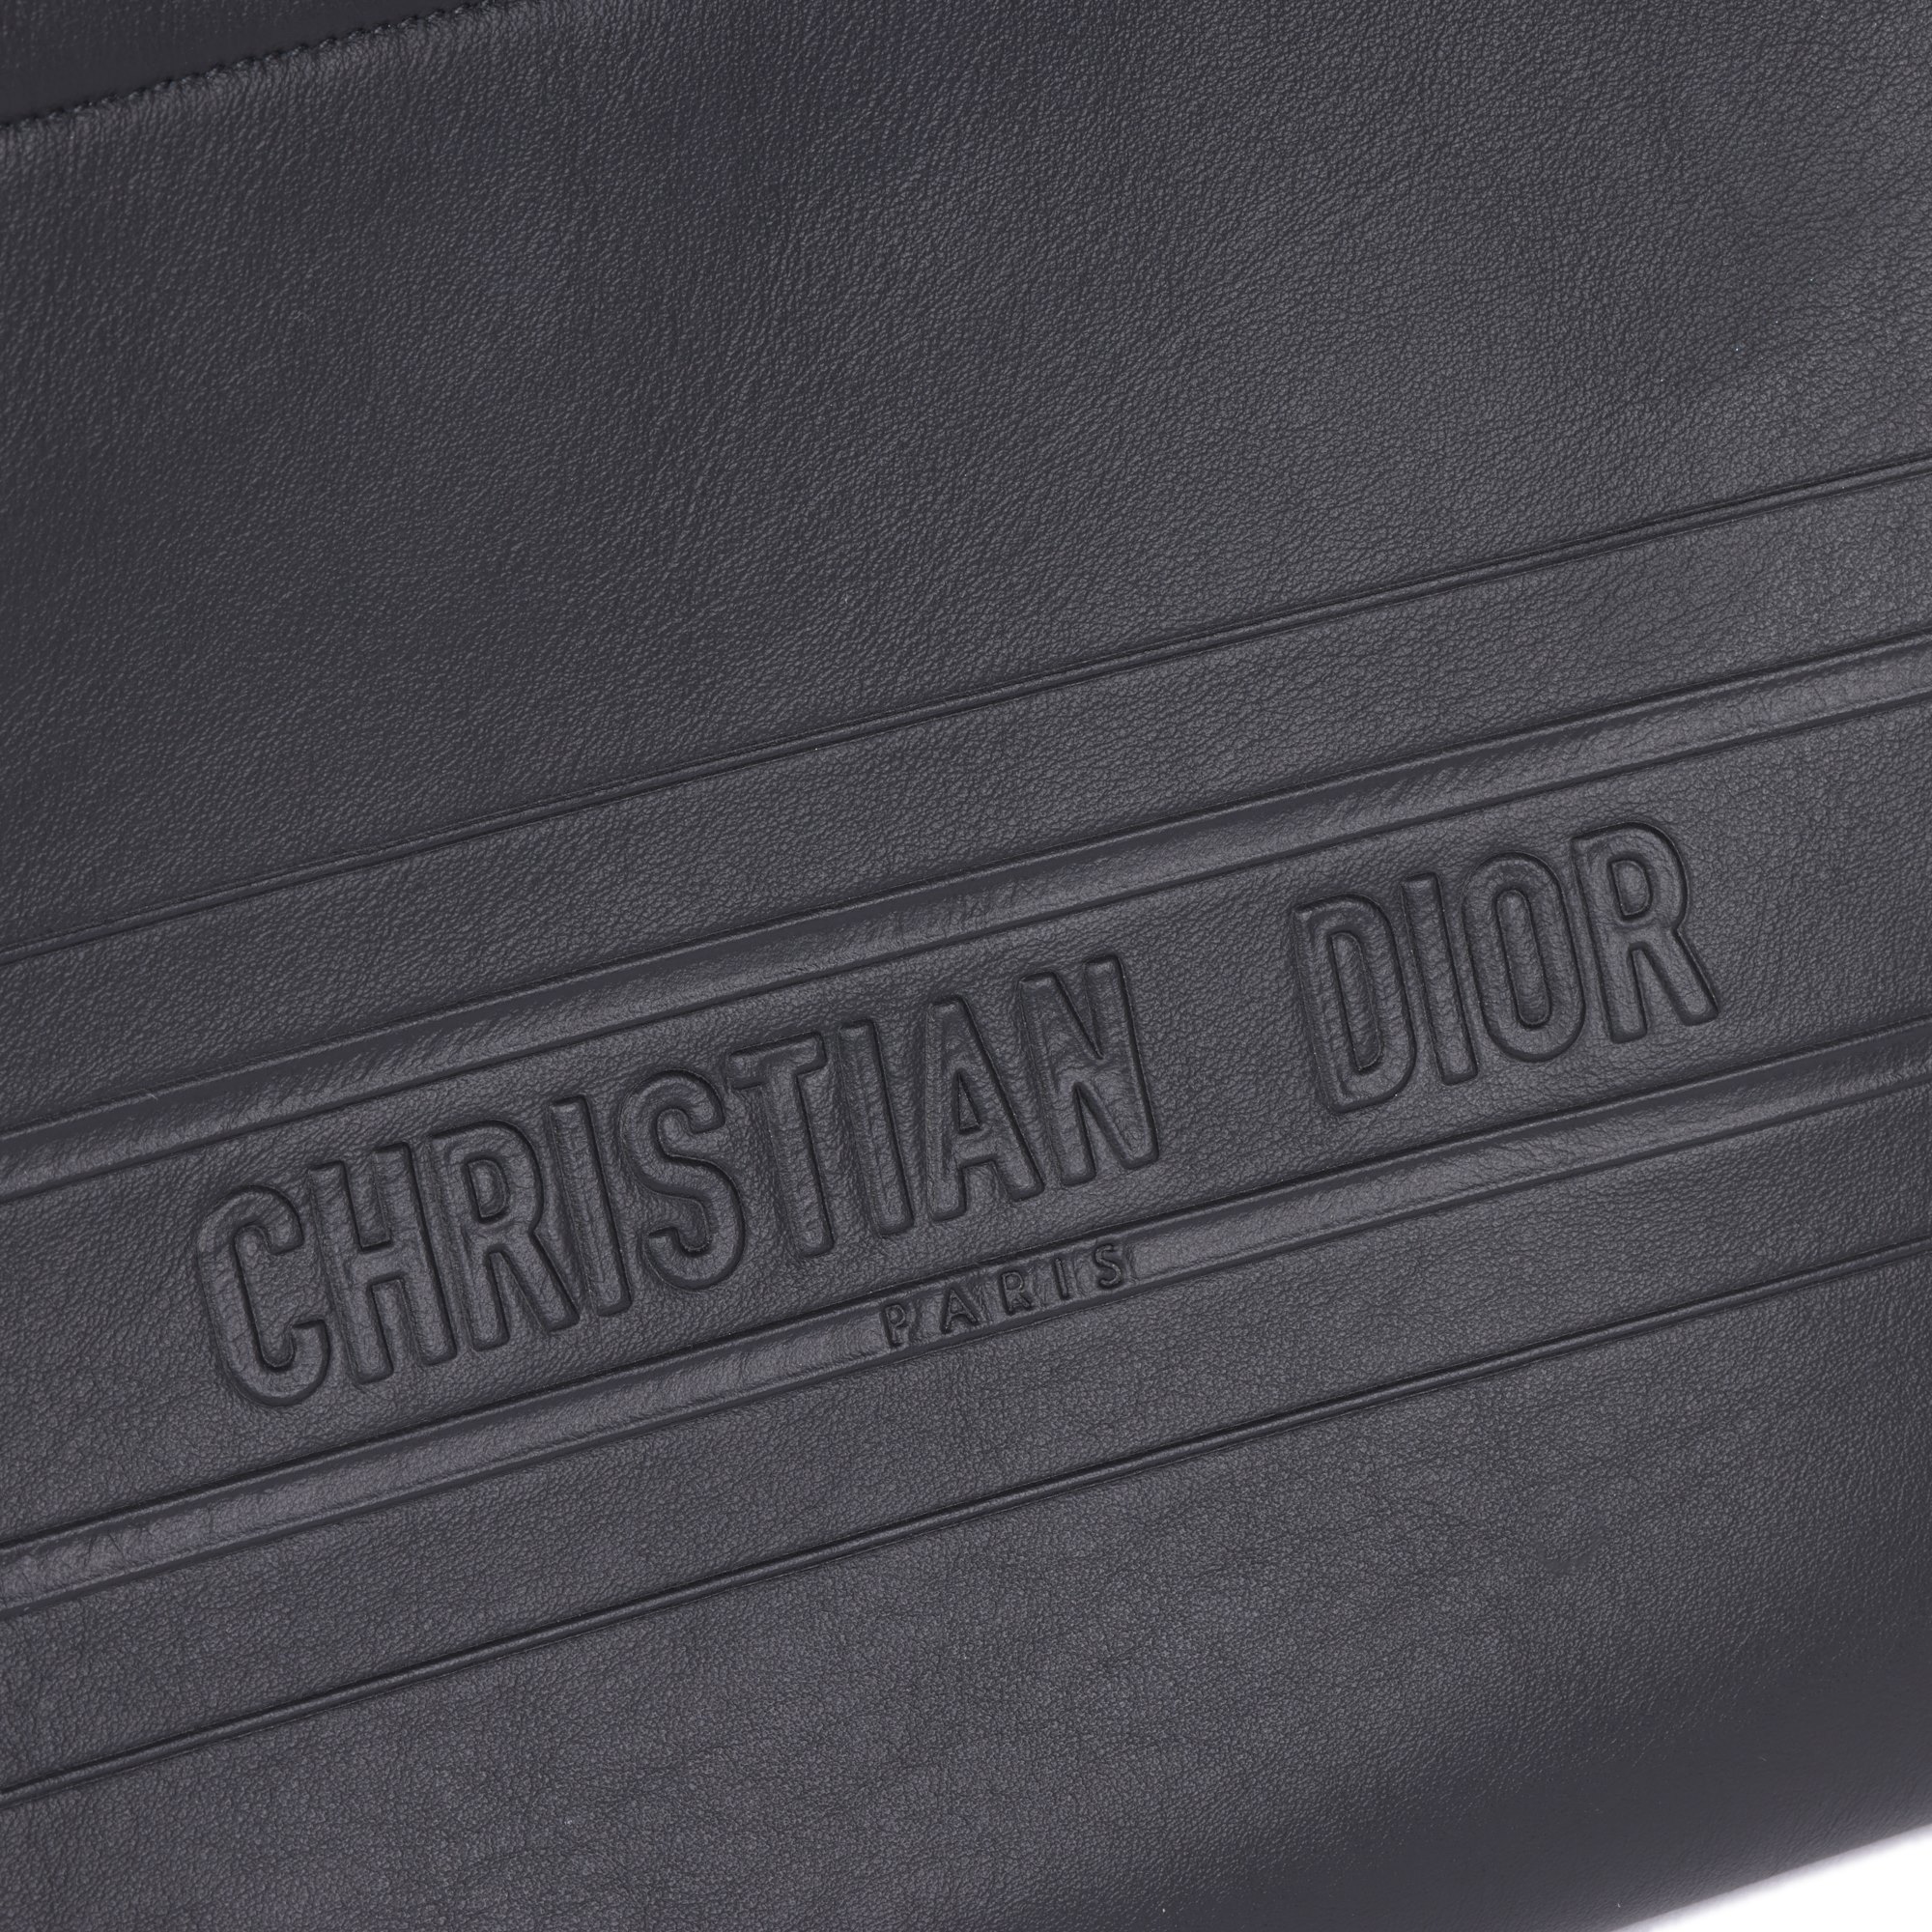 Christian Dior Black Calfskin Leather Clutch